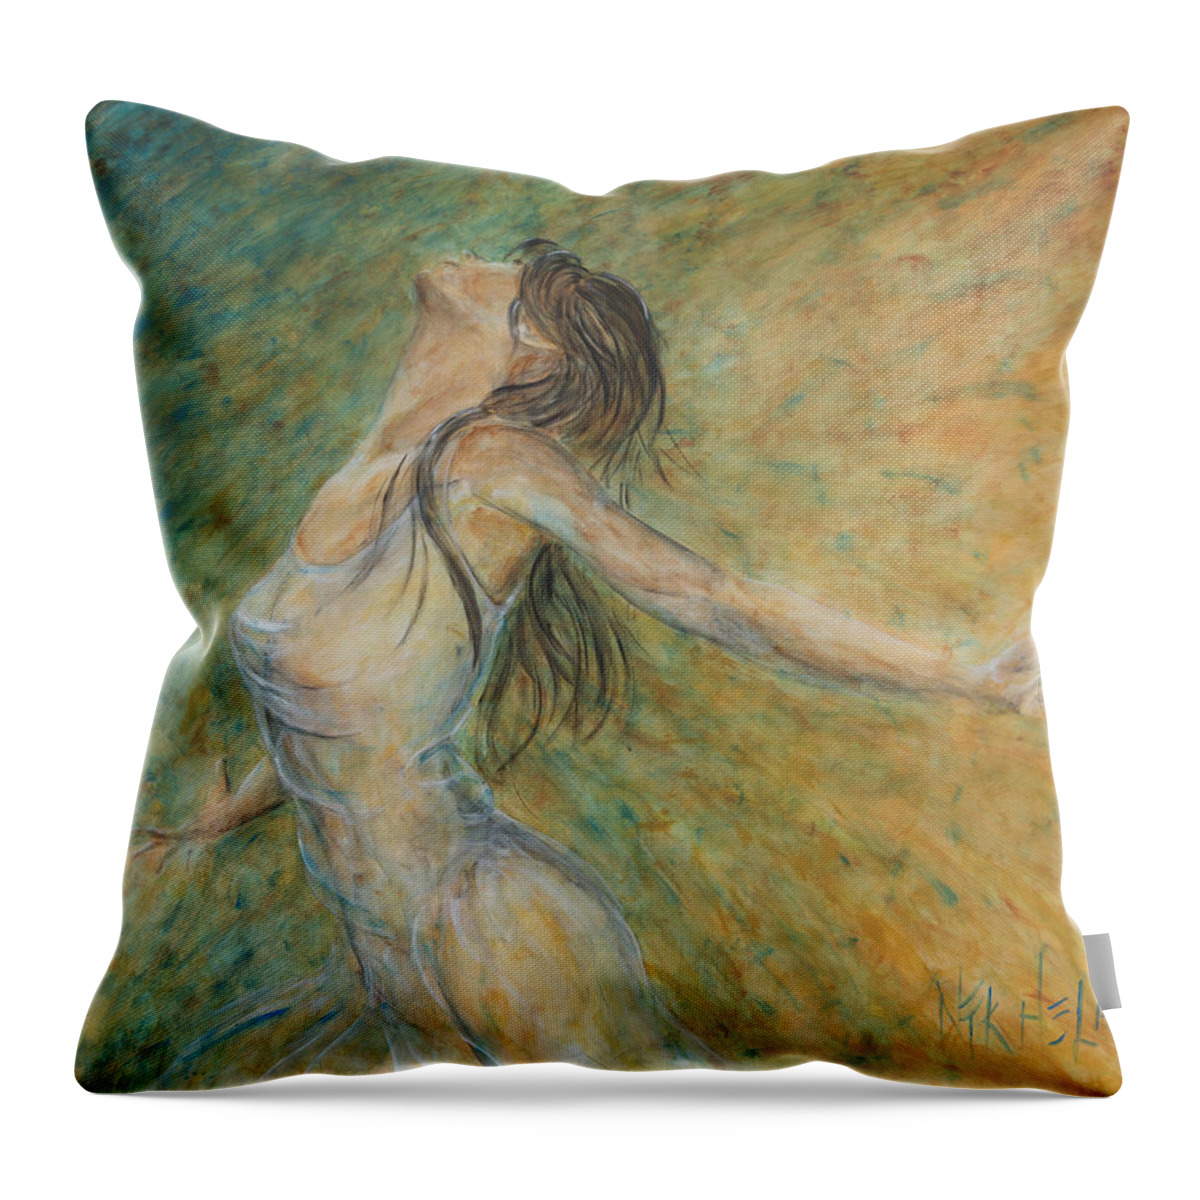 La Primavera Throw Pillow featuring the painting La Primavera II by Nik Helbig